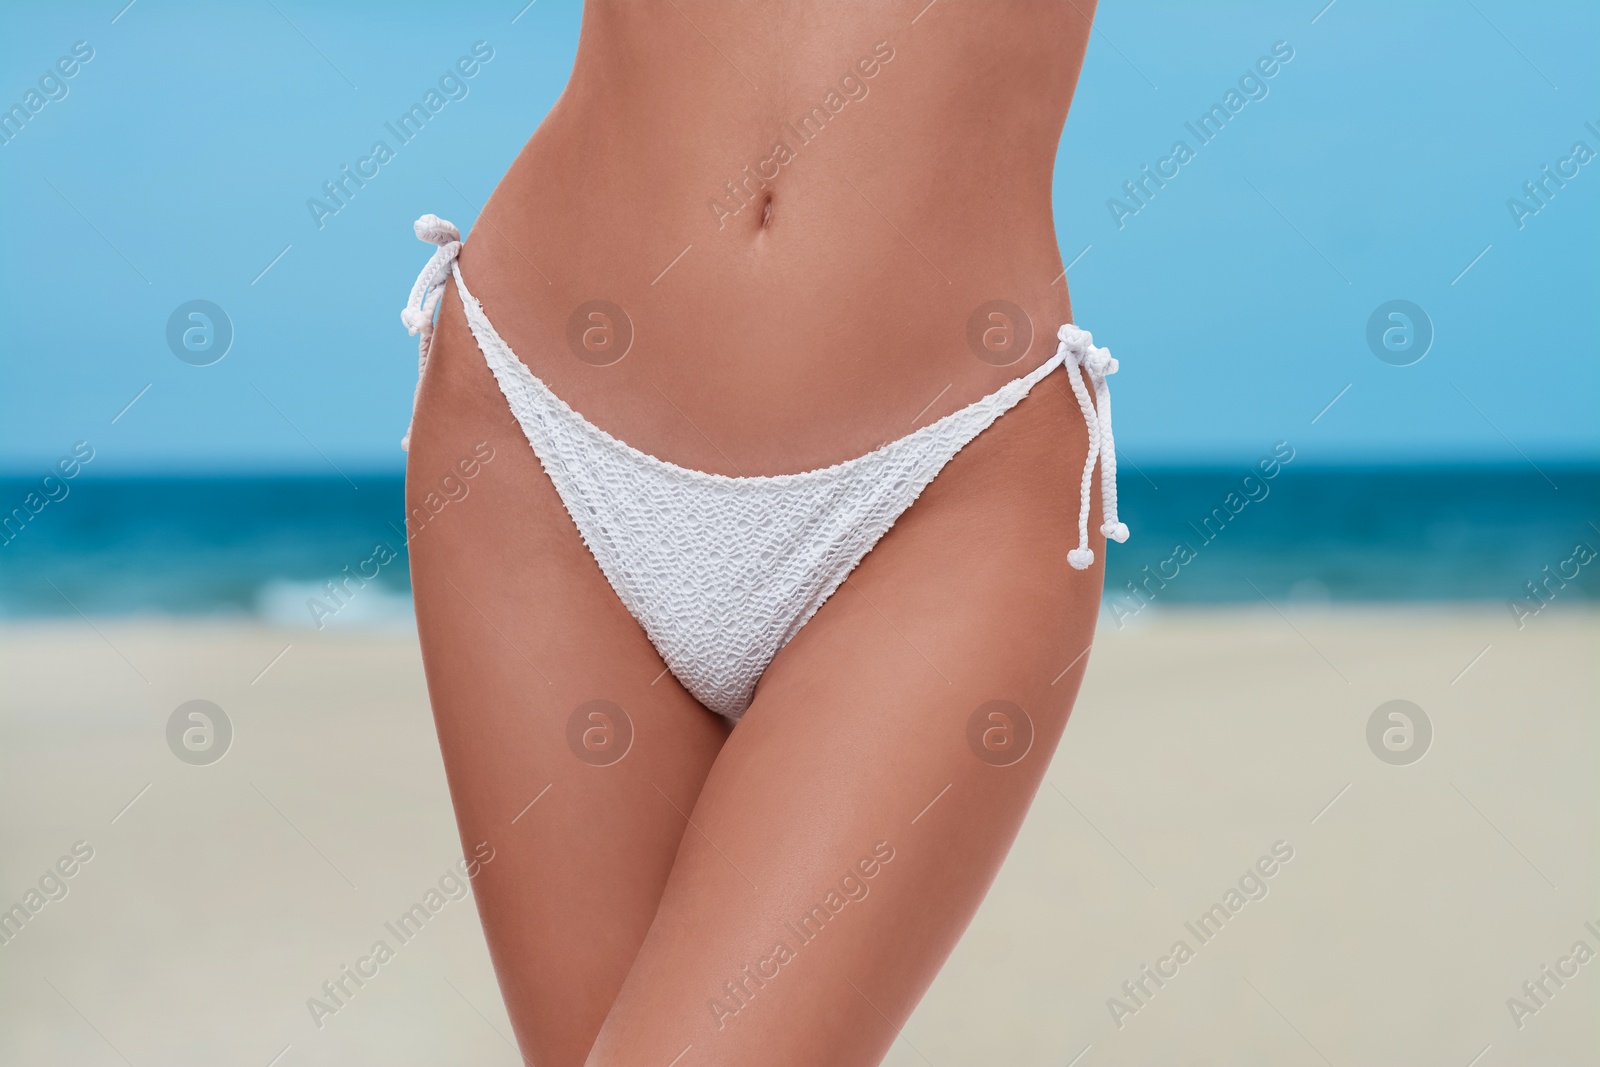 Image of Woman in stylish white bikini on sandy beach near sea, closeup